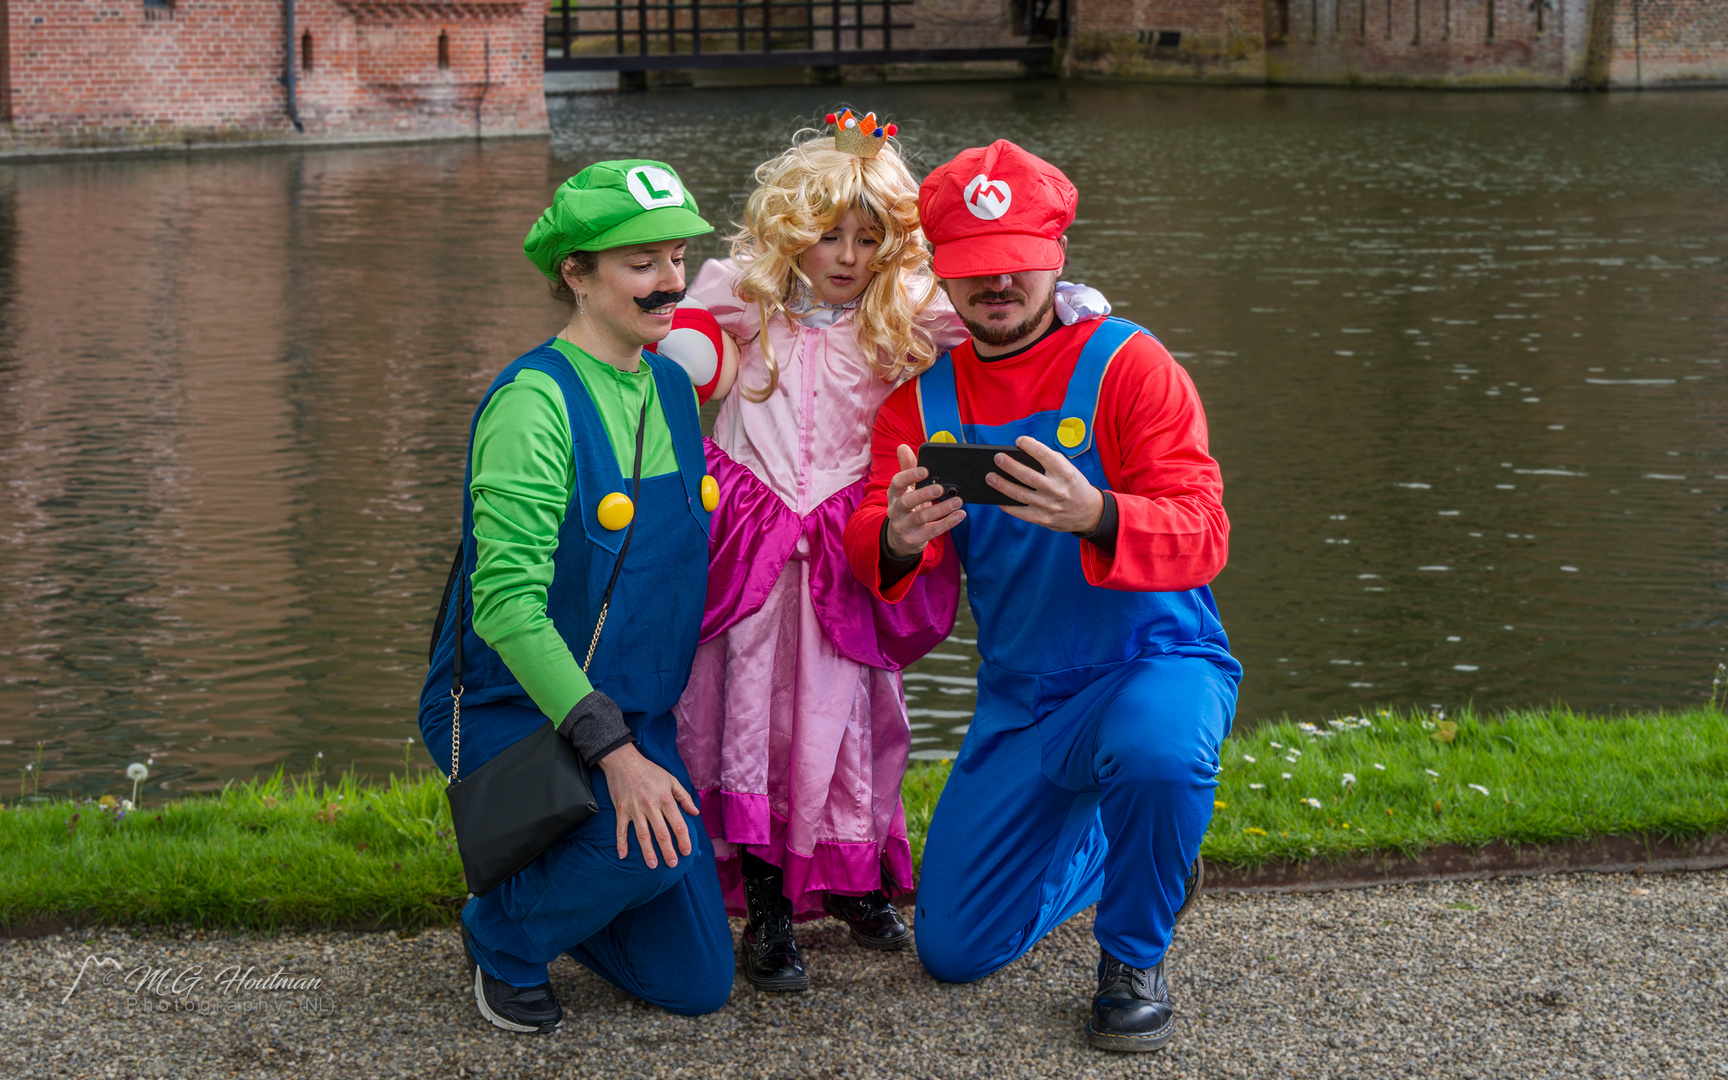 Mario Familie macht Selfie